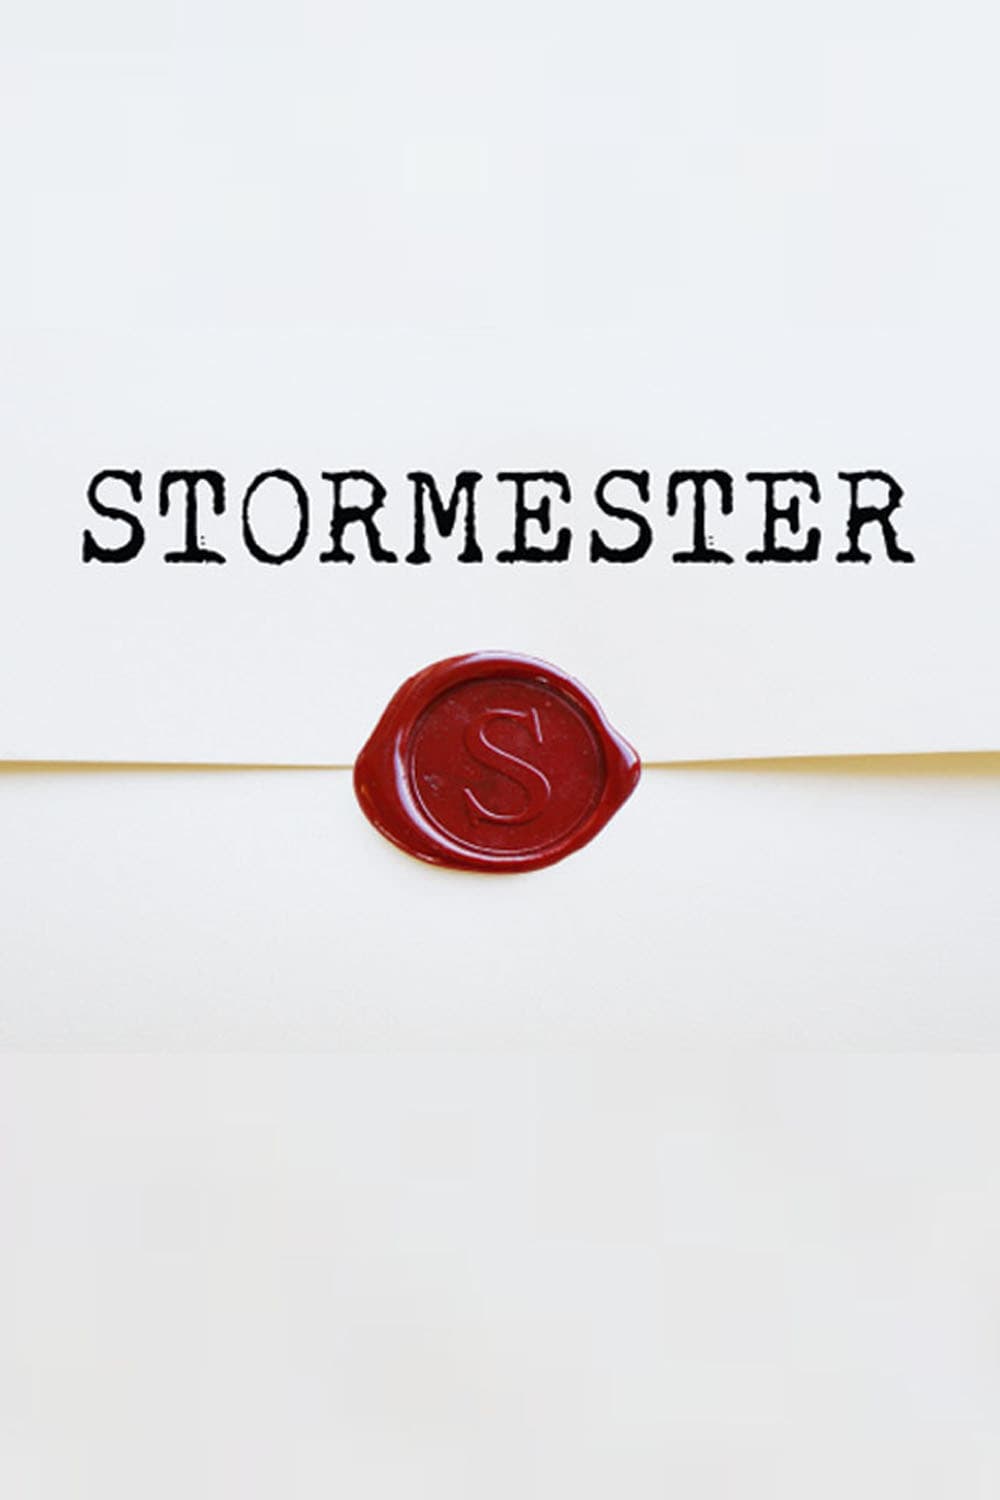 Stormester (2018)